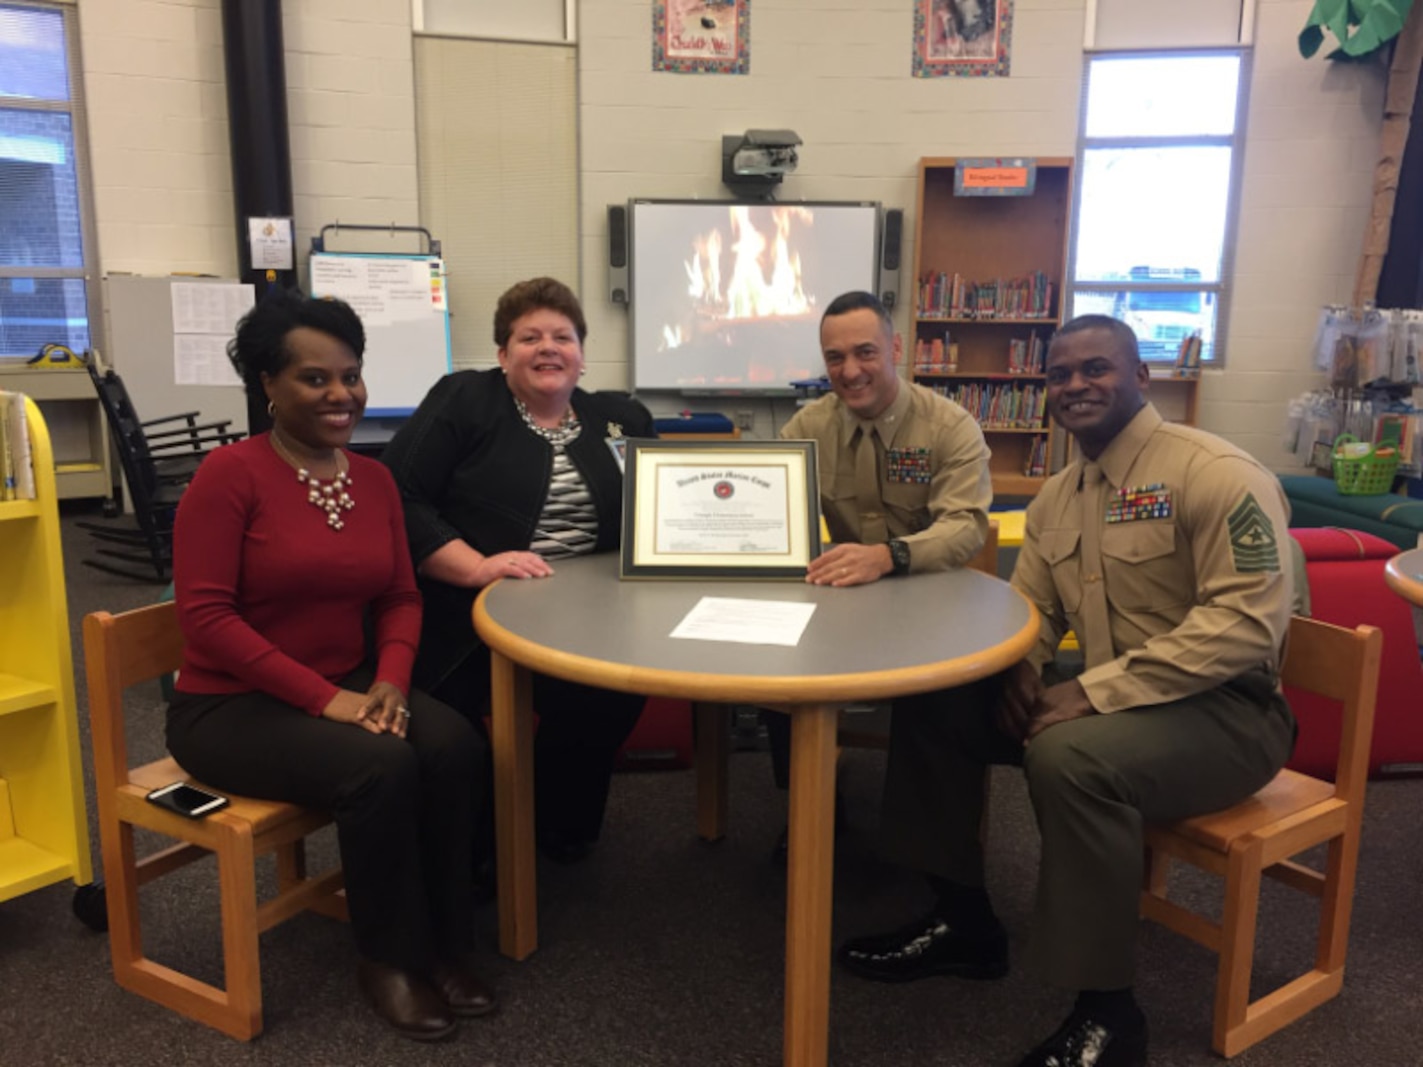 Col Murray and SgtMaj Williams kick off the Adopt-A-School Program at Triangle Elementary School.